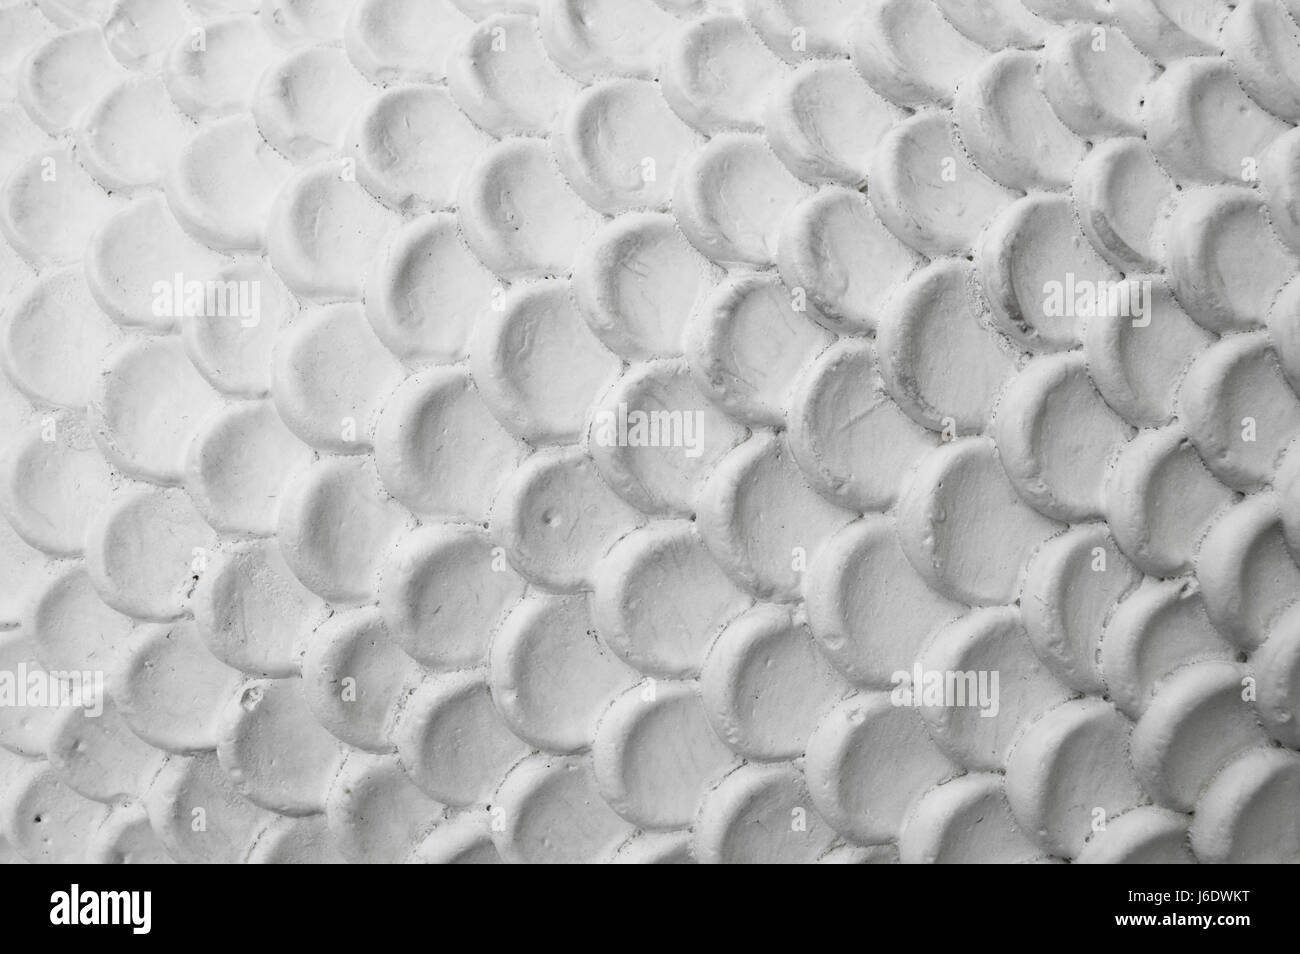 Fish scale sculpture texture Stock Photo - Alamy